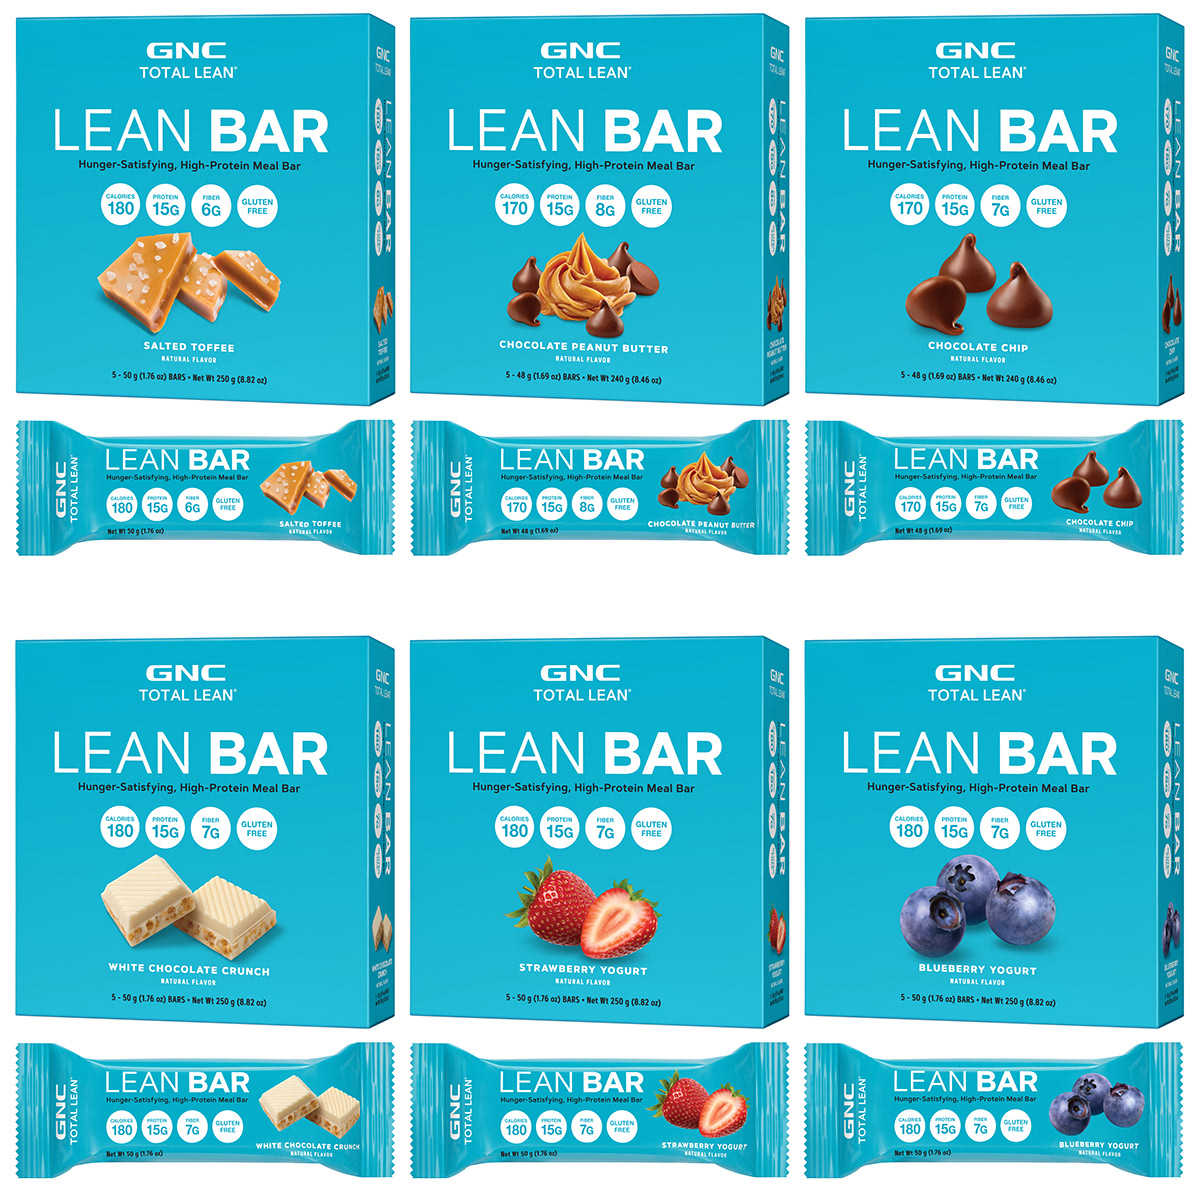 GNC Total Lean redesign Packaging packaging design supplements vitamins Health Wellness